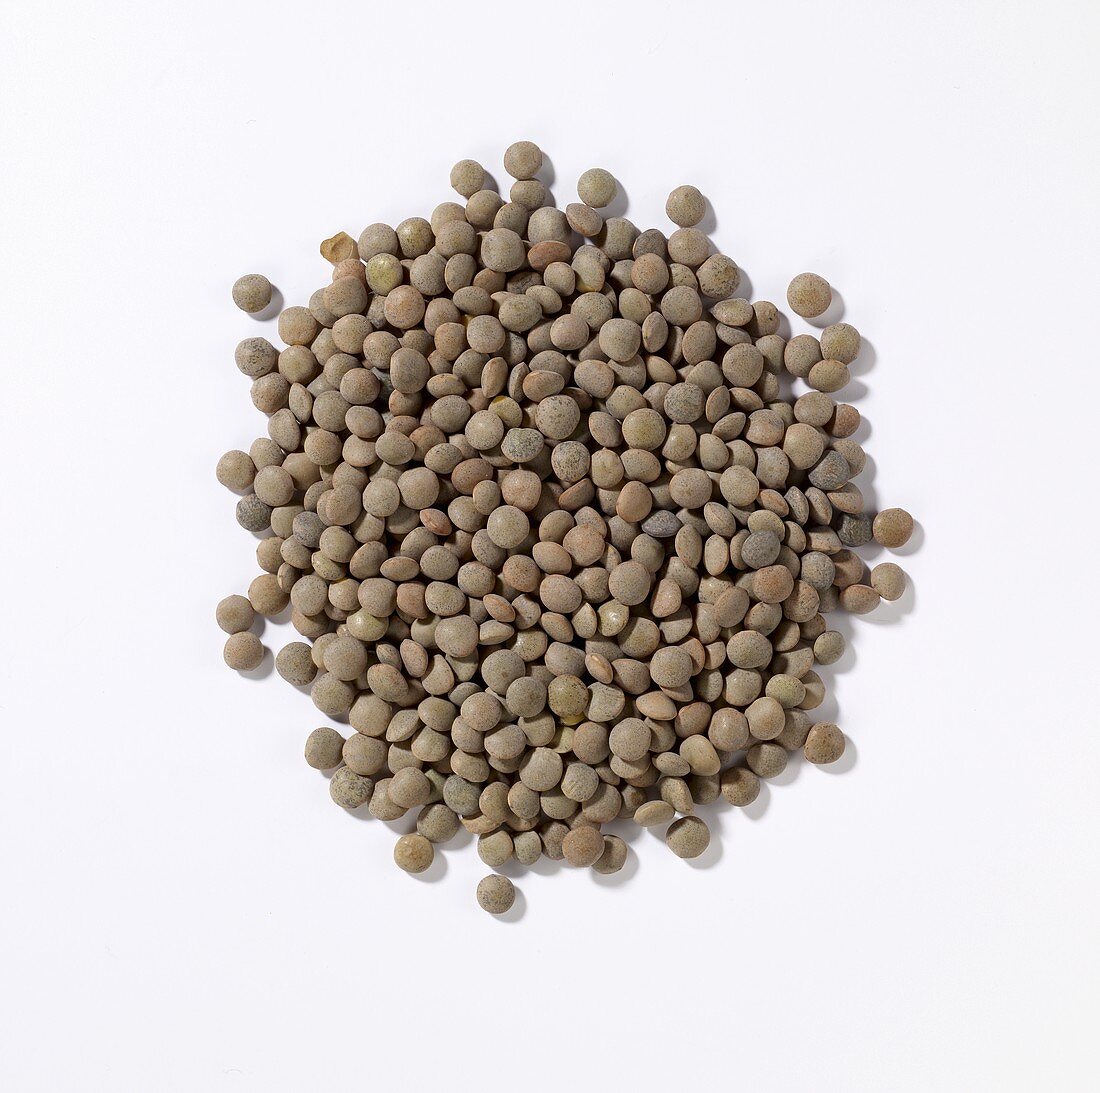 A heap of Pardina lentils